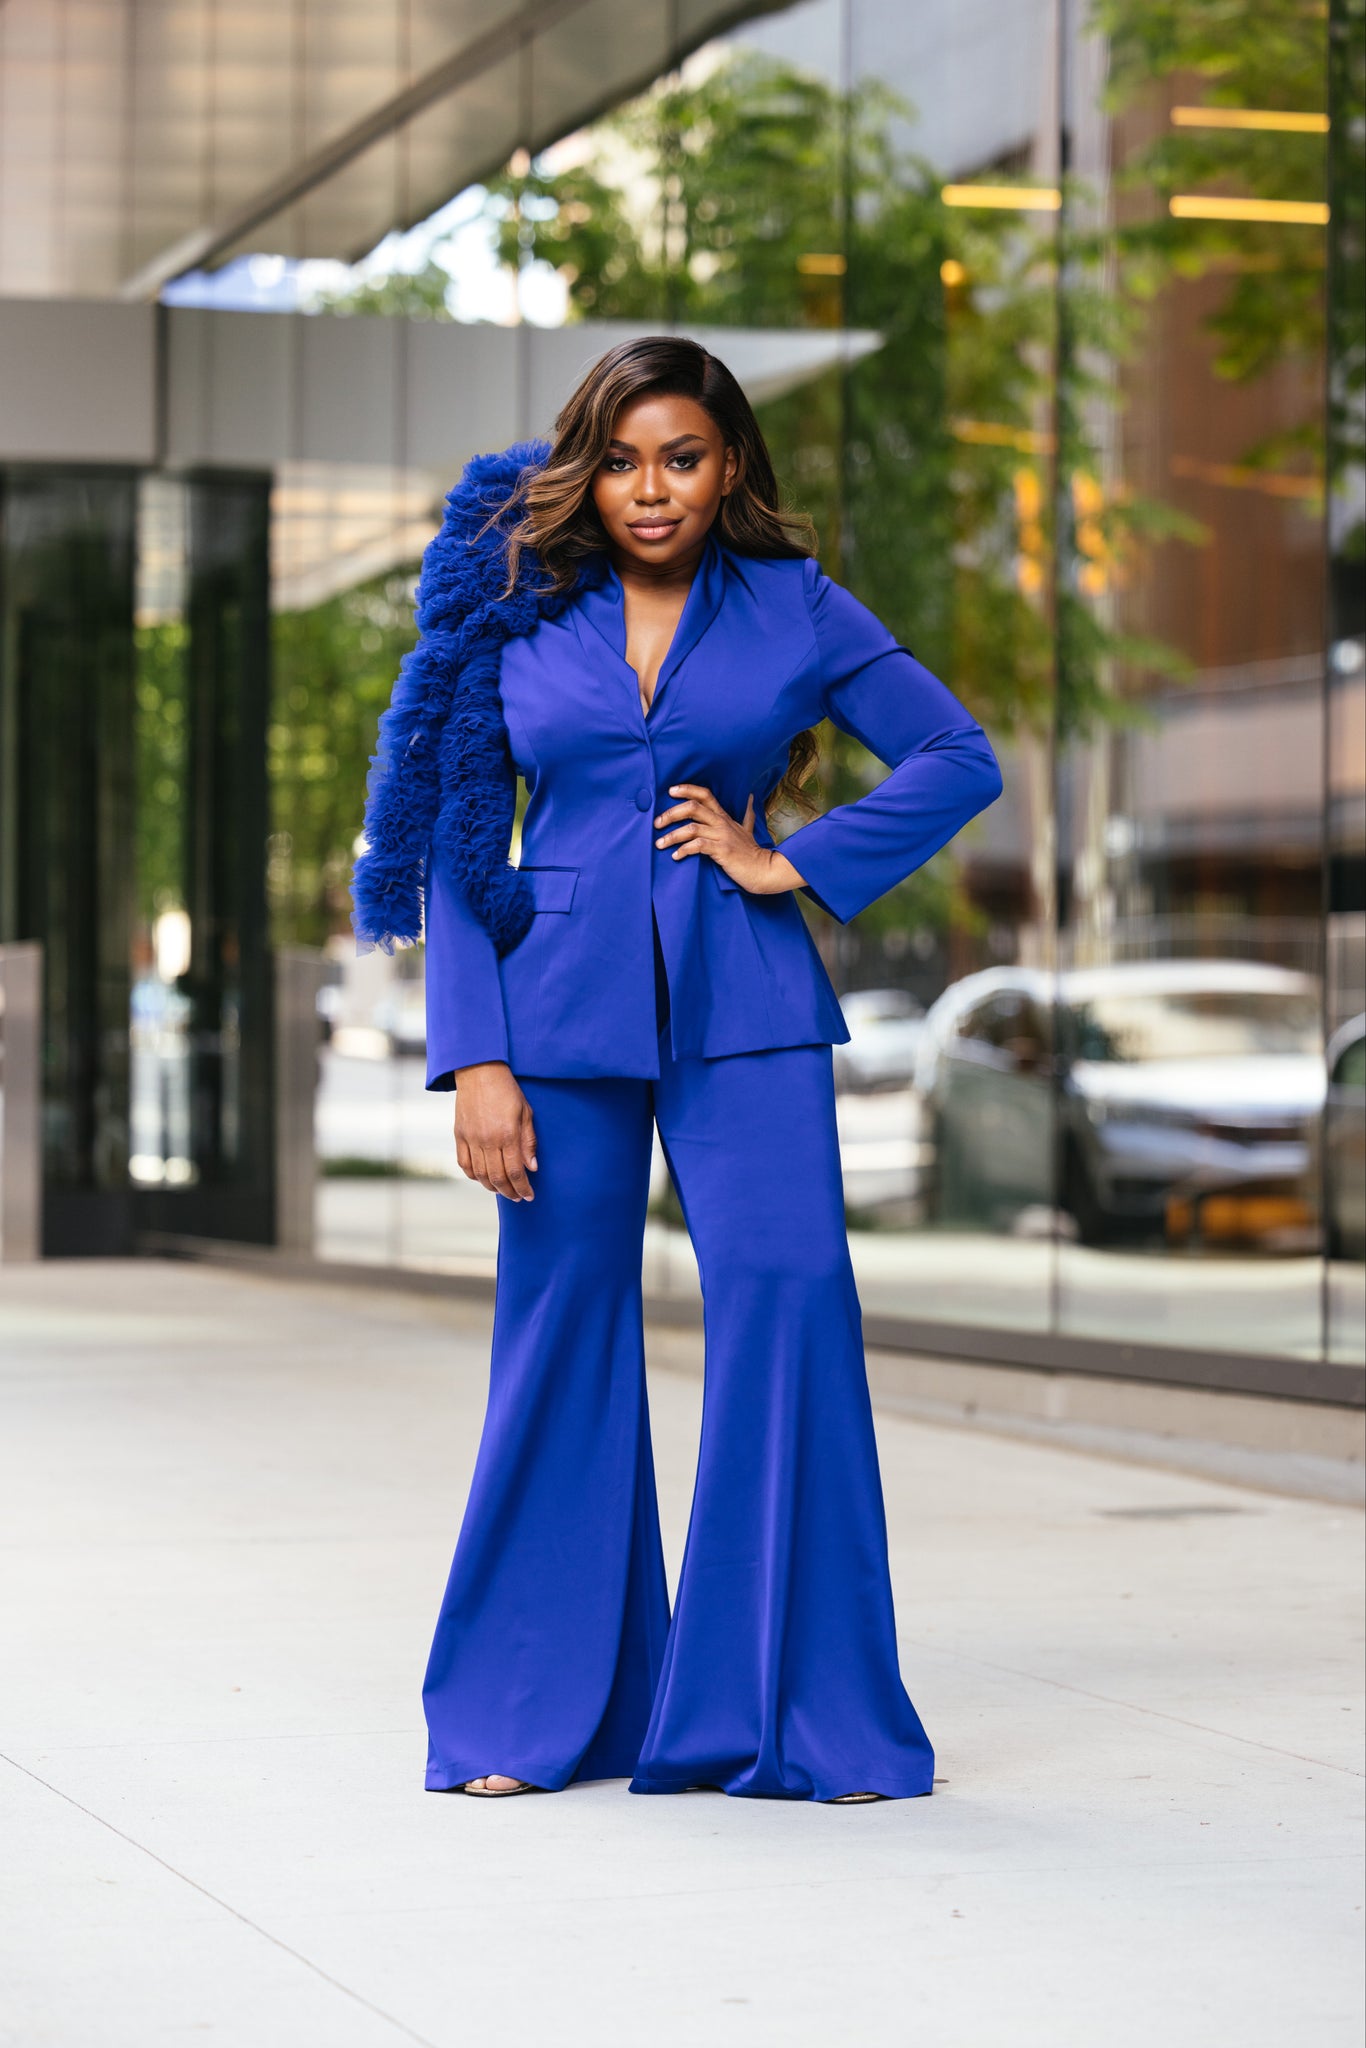 Black Woman in a Blue Power Suit